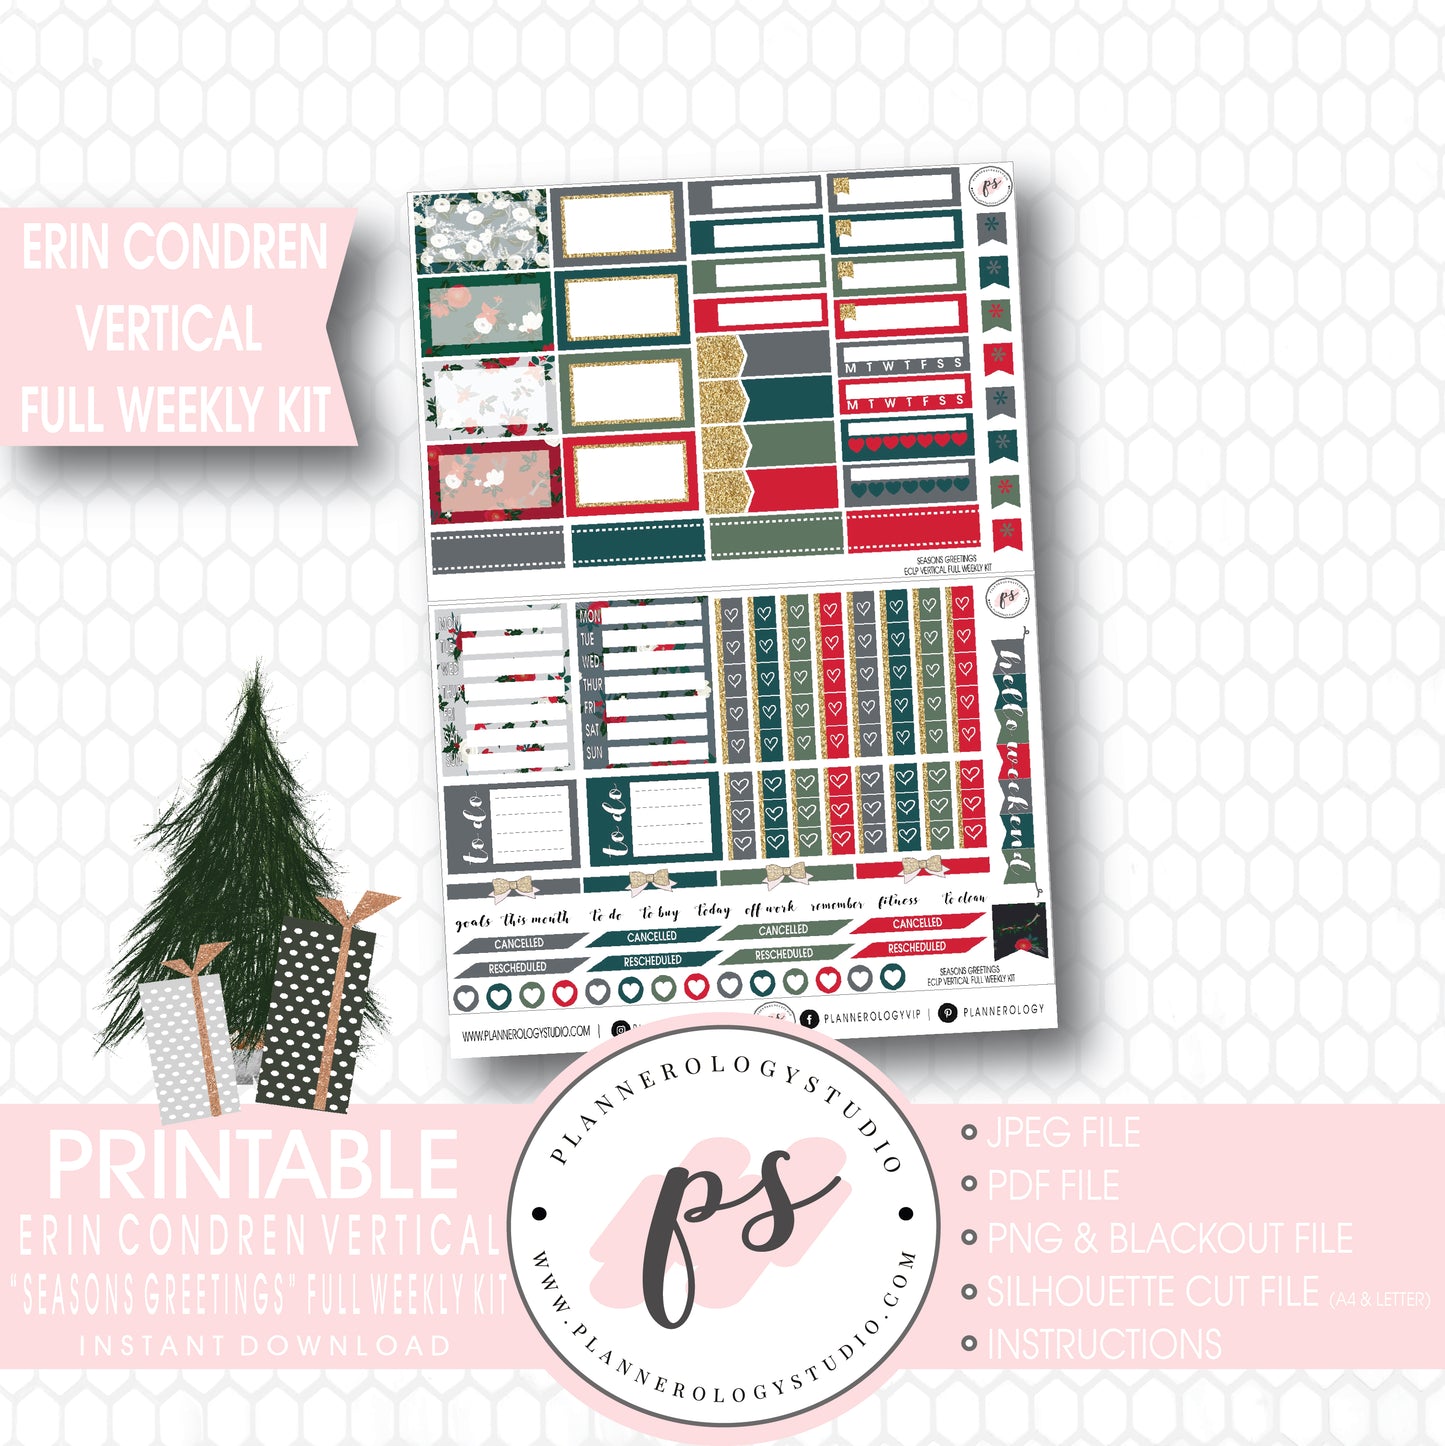 Seasons Greetings Christmas Full Weekly Kit Printable Planner Stickers (for use with Erin Condren Vertical) - Plannerologystudio